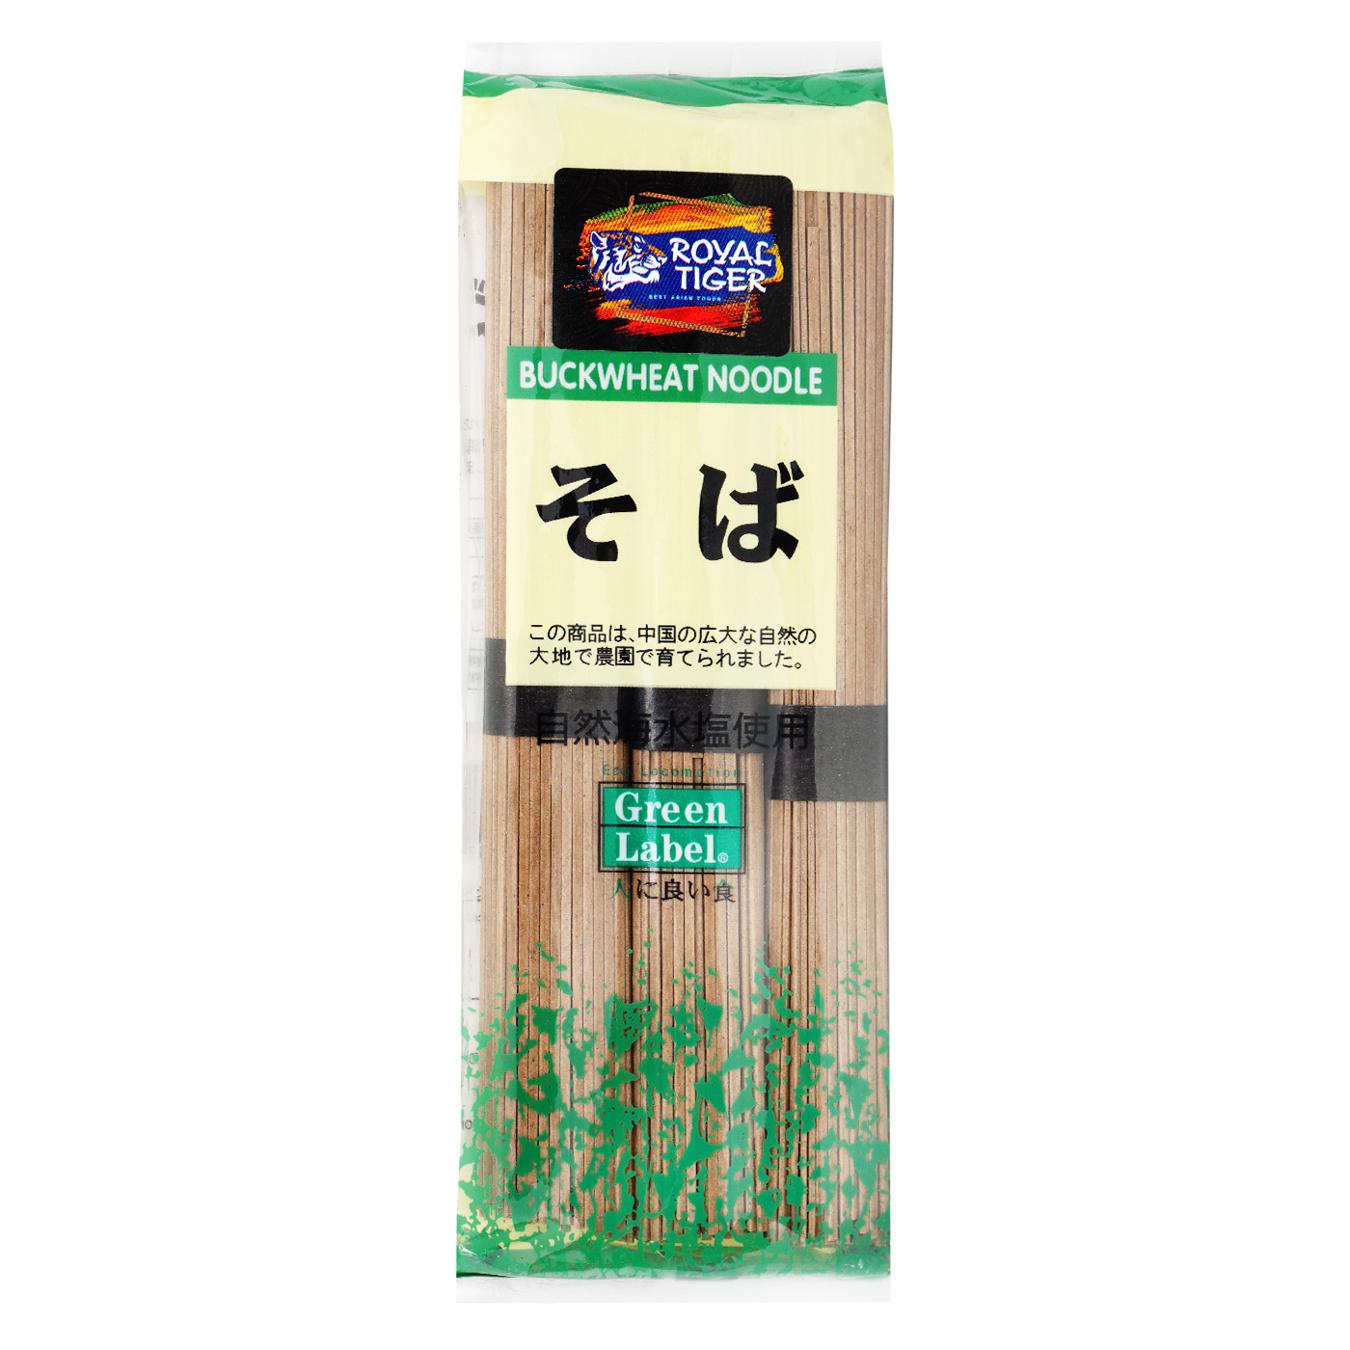 Royal TigerI Soba buckwheat noodles 300g